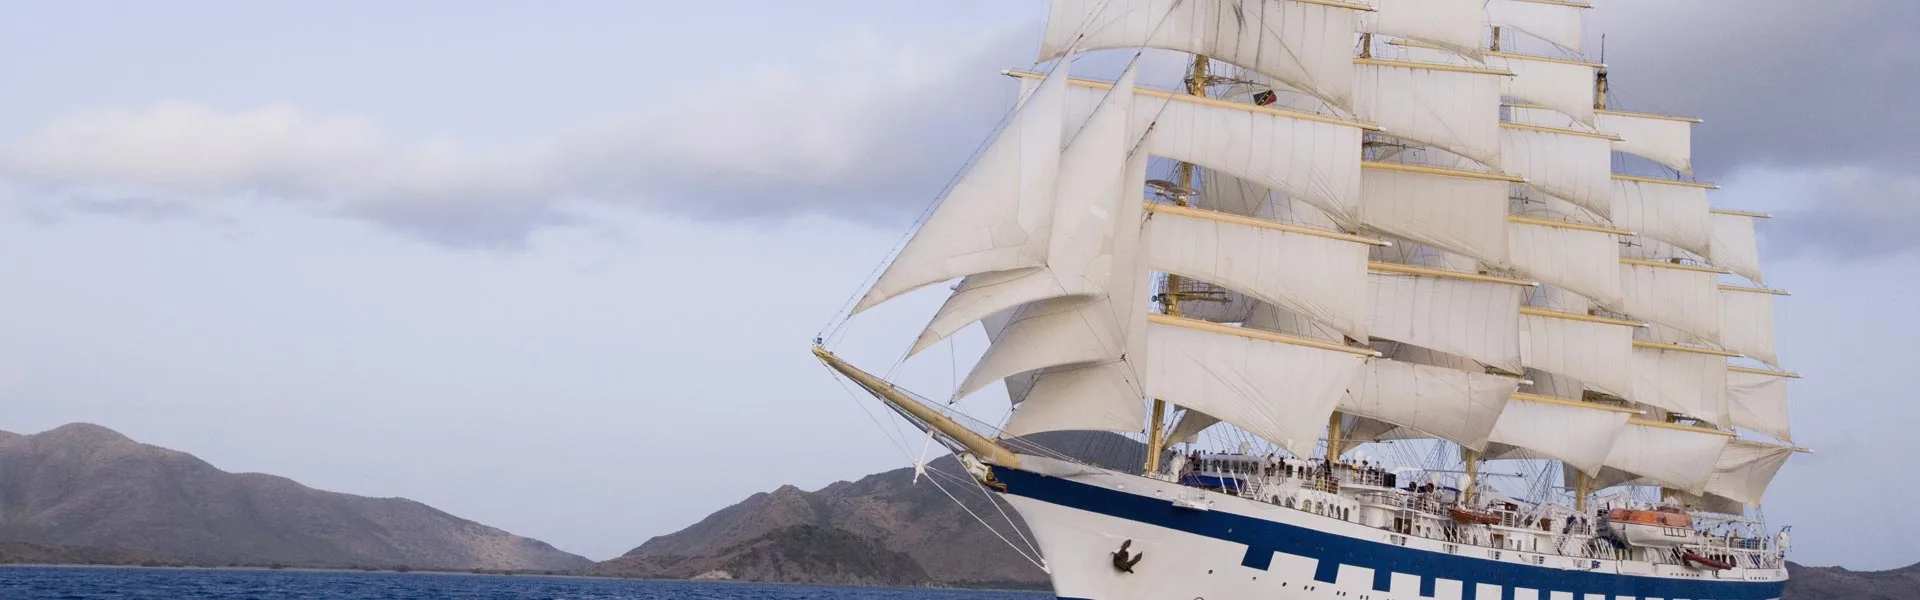 Sicily Cruise, Sicily &#038; The Amalfi Coast Star Clipper